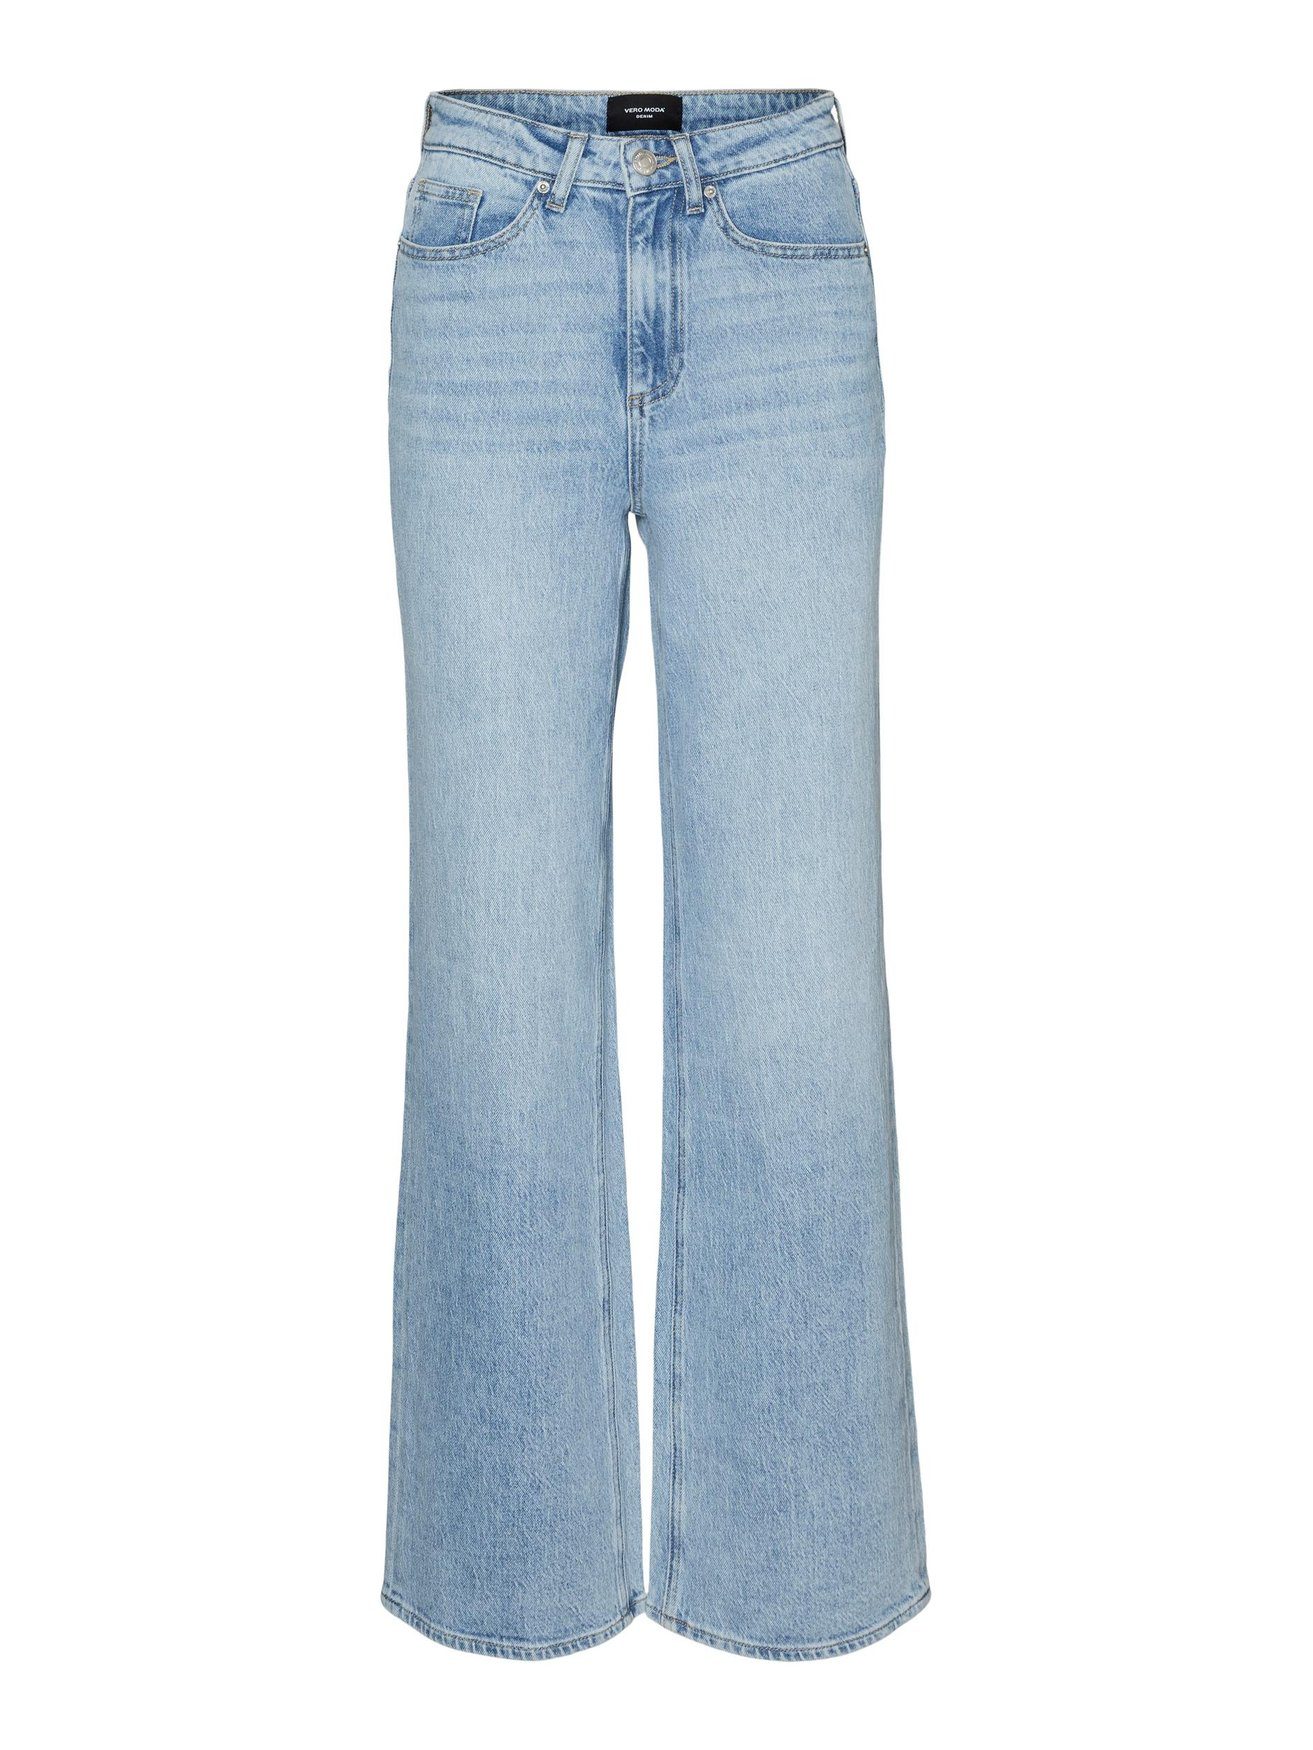 Denim Vero Hellblau Jeans in VMTESSA Straight Washed Schlagjeans Moda Stone Fit 5973